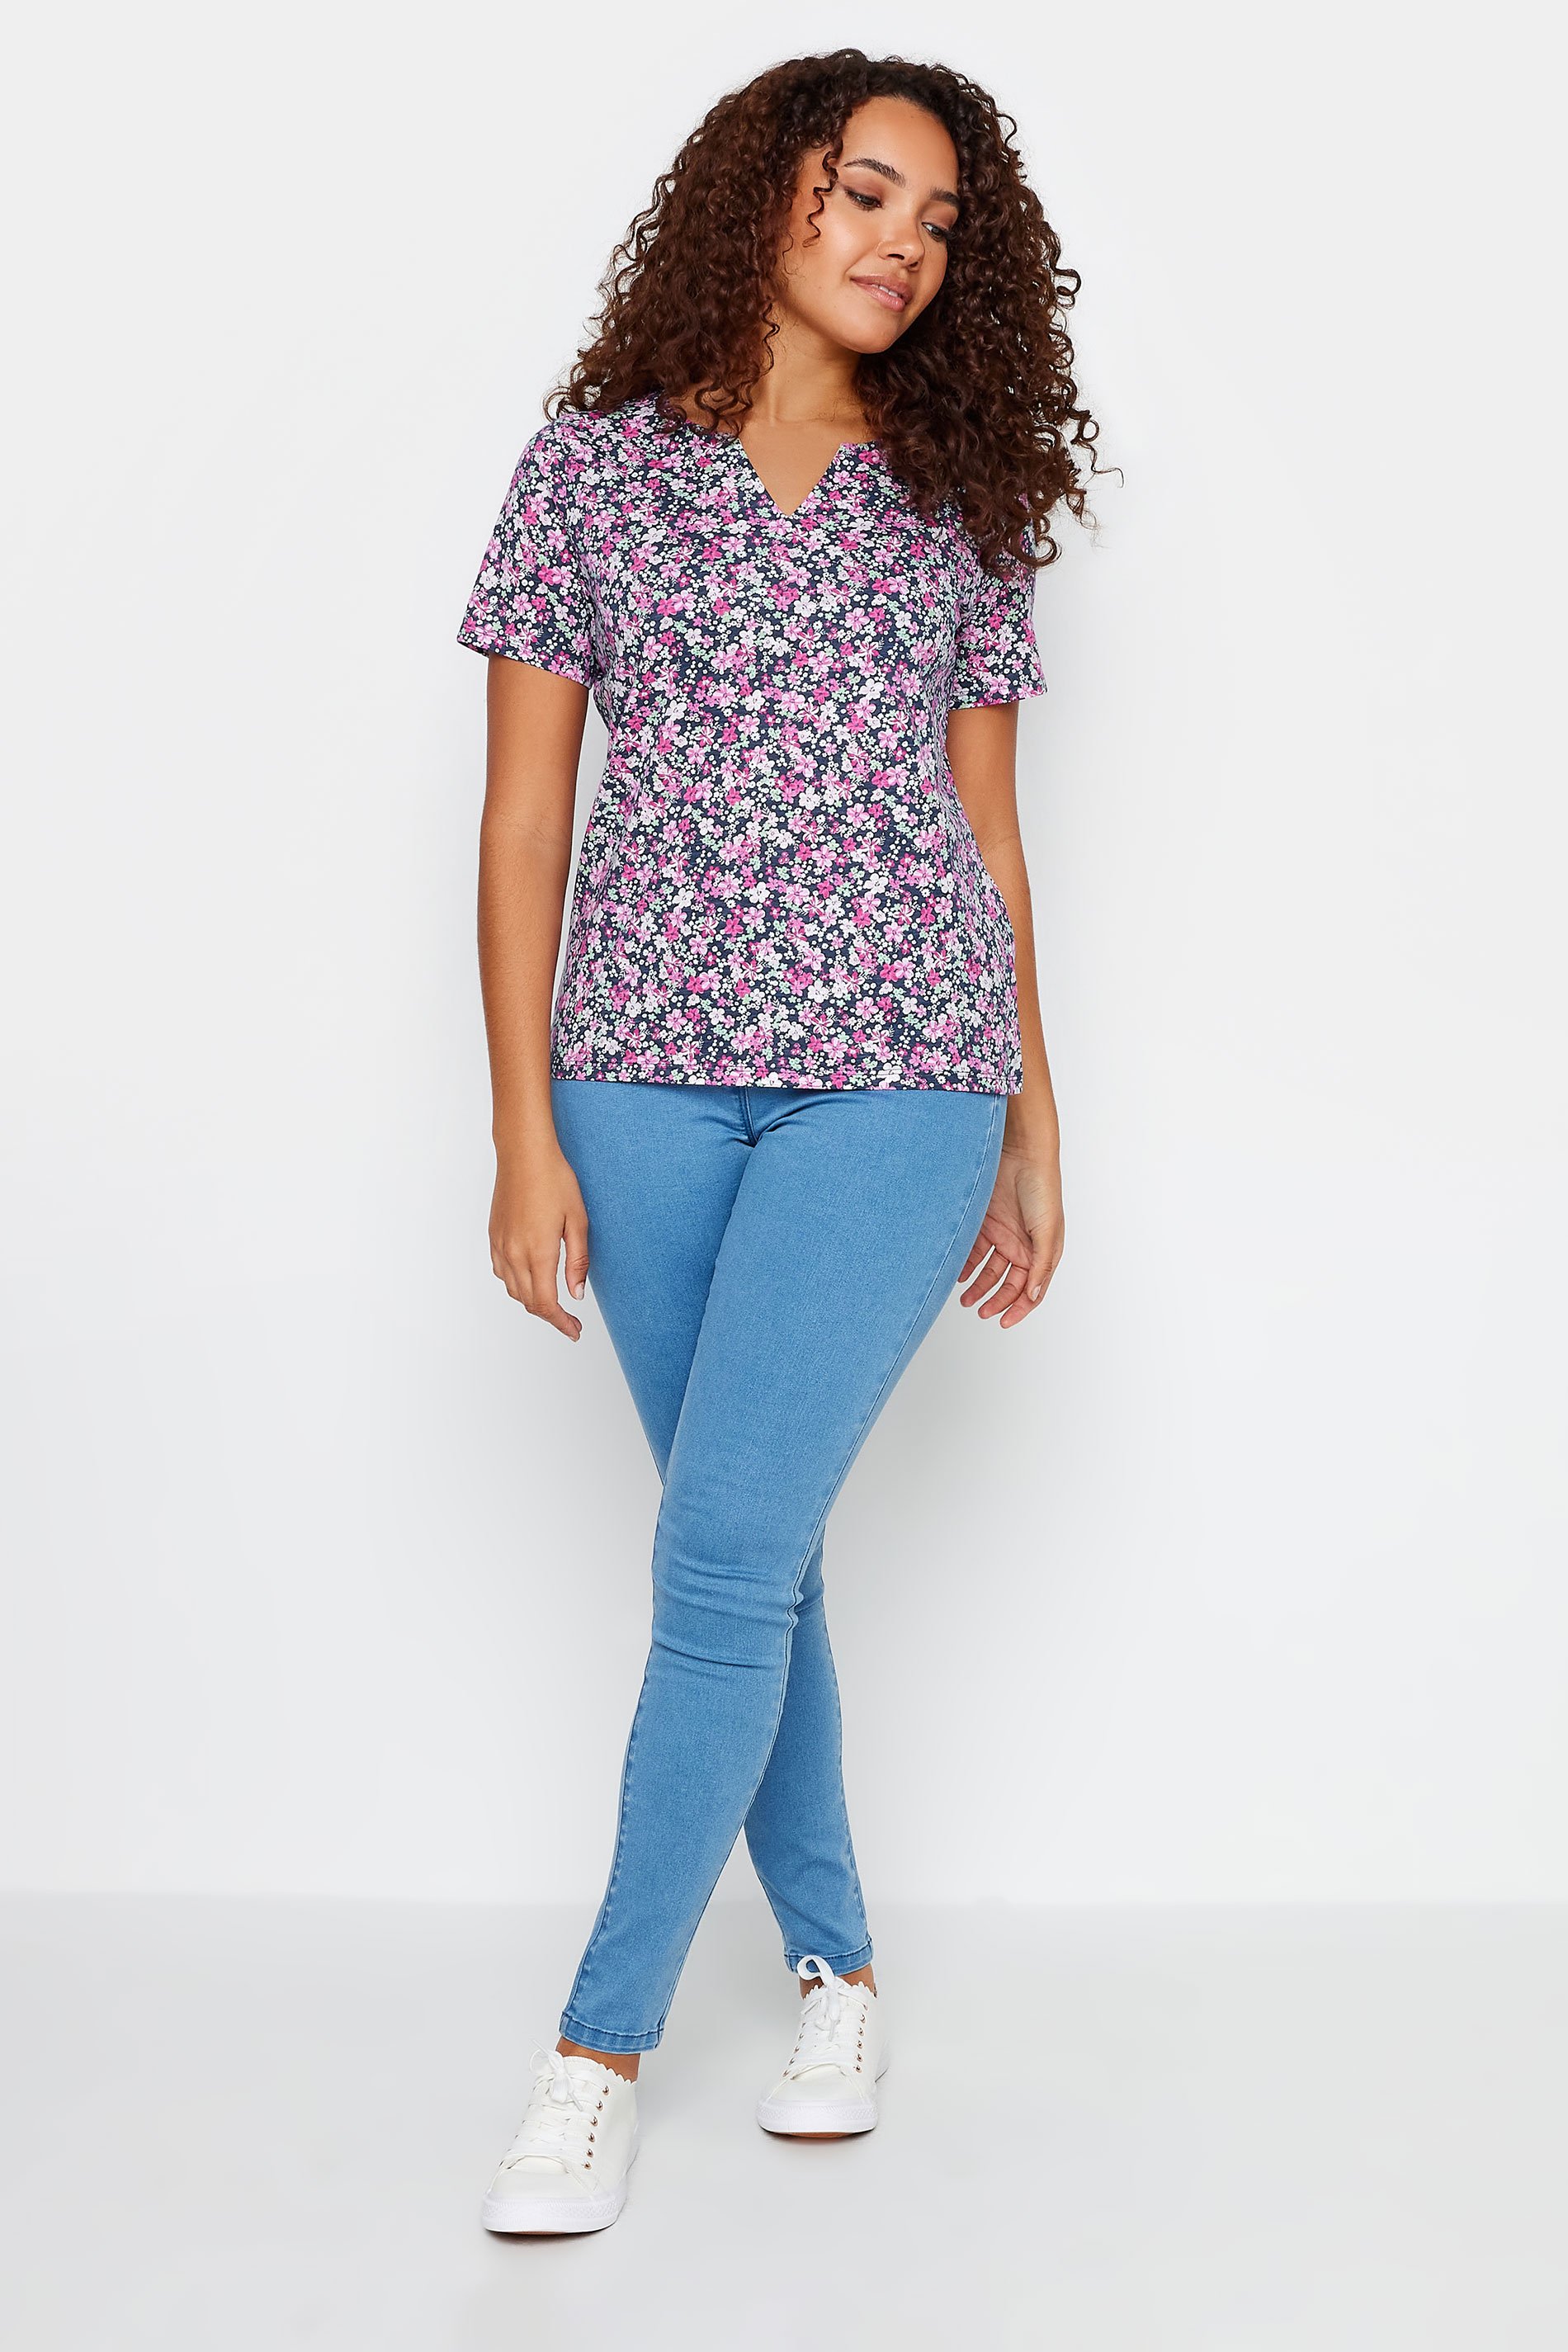 M&Co Pink Ditsy Floral Print Notch Neck Cotton T-Shirt | M&Co 2